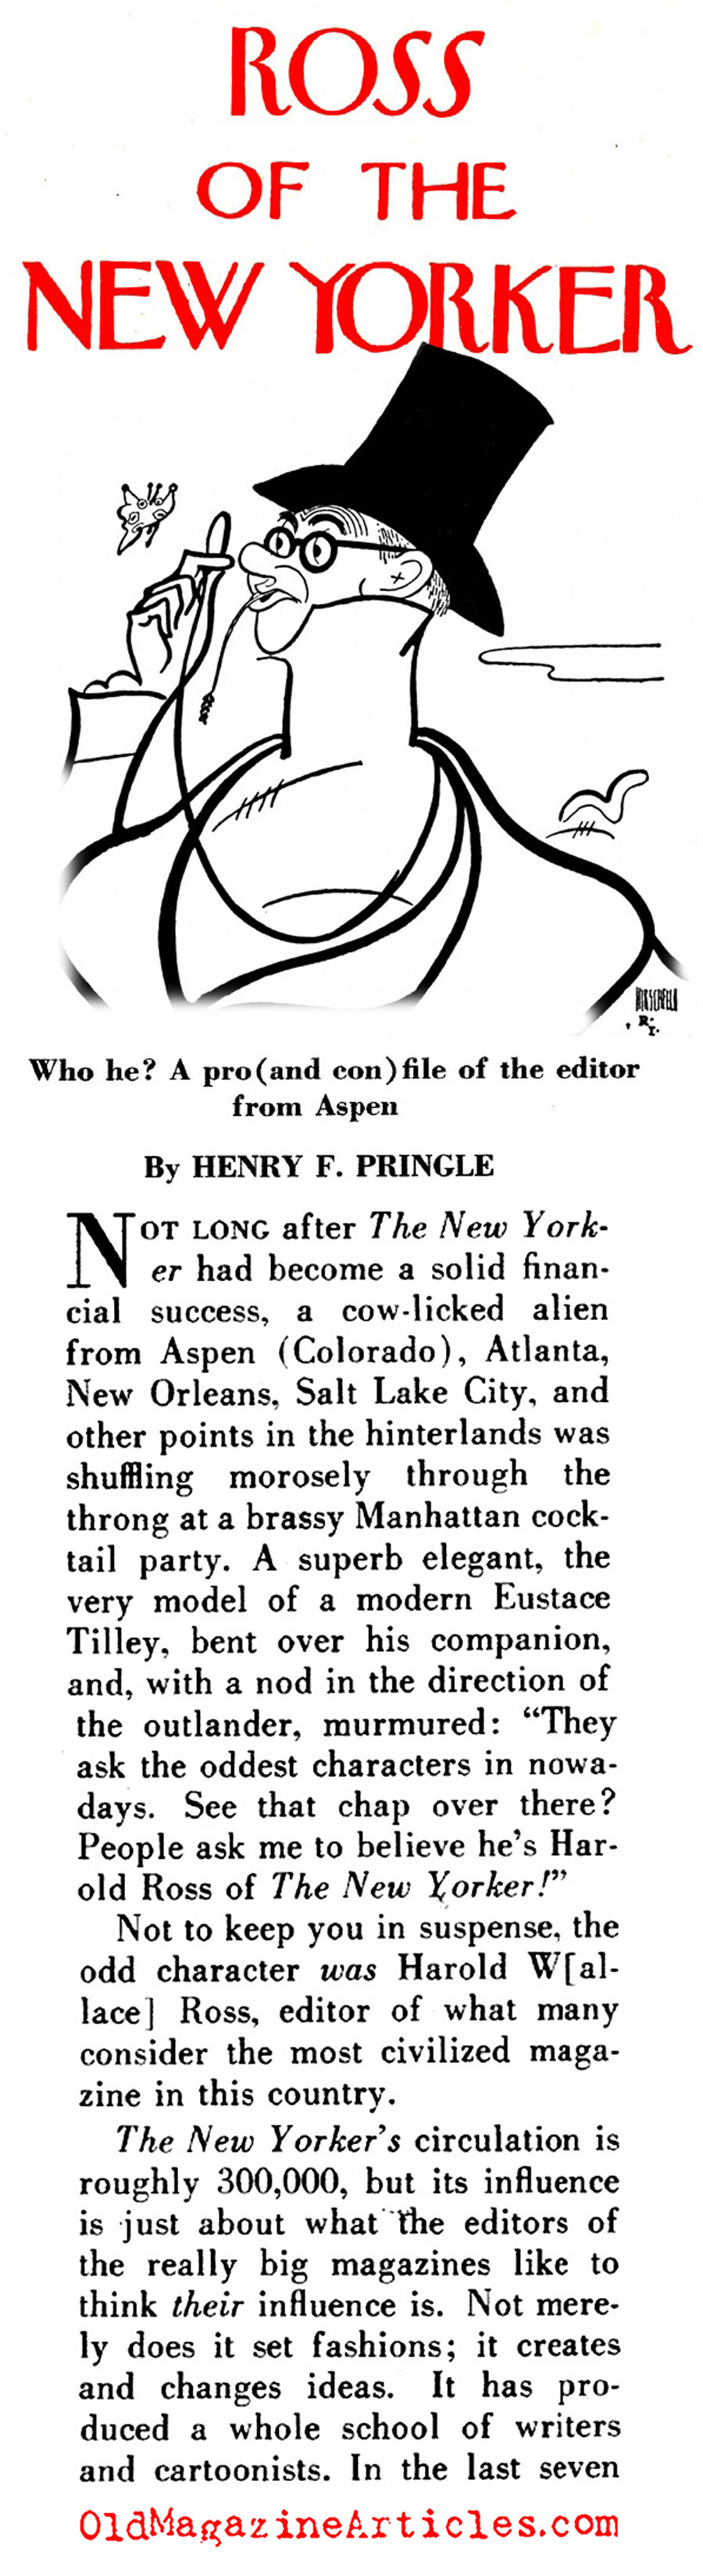 The New Yorker ('48 Magazine, 1948)